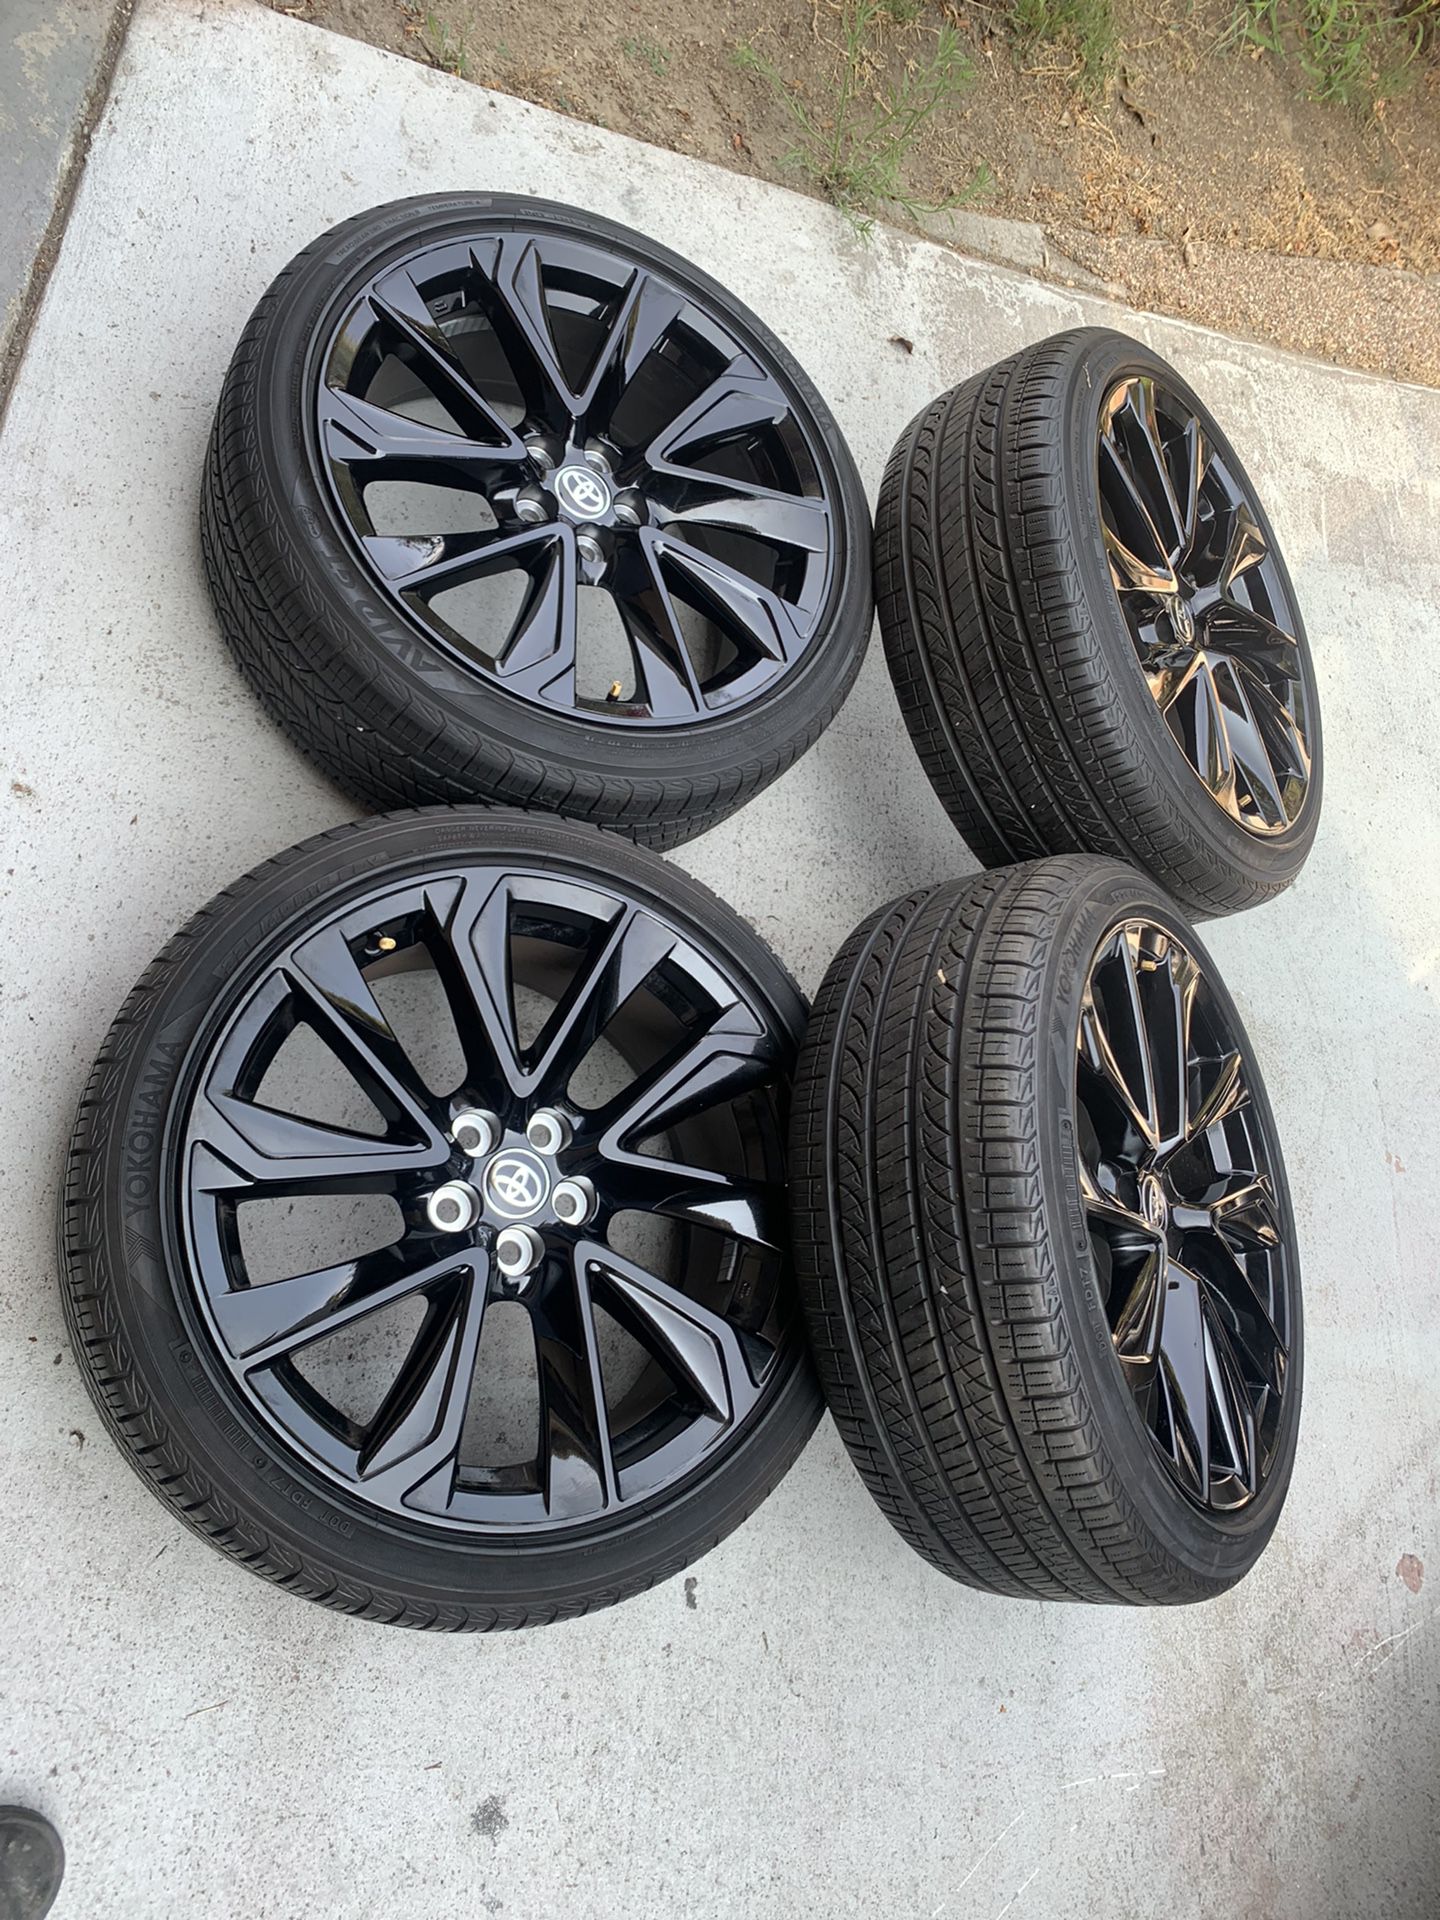 Toyota Corolla Rims And Tires 18” Original OEM Wheels Rines De Corolla New Gloss Black Powder Coated 